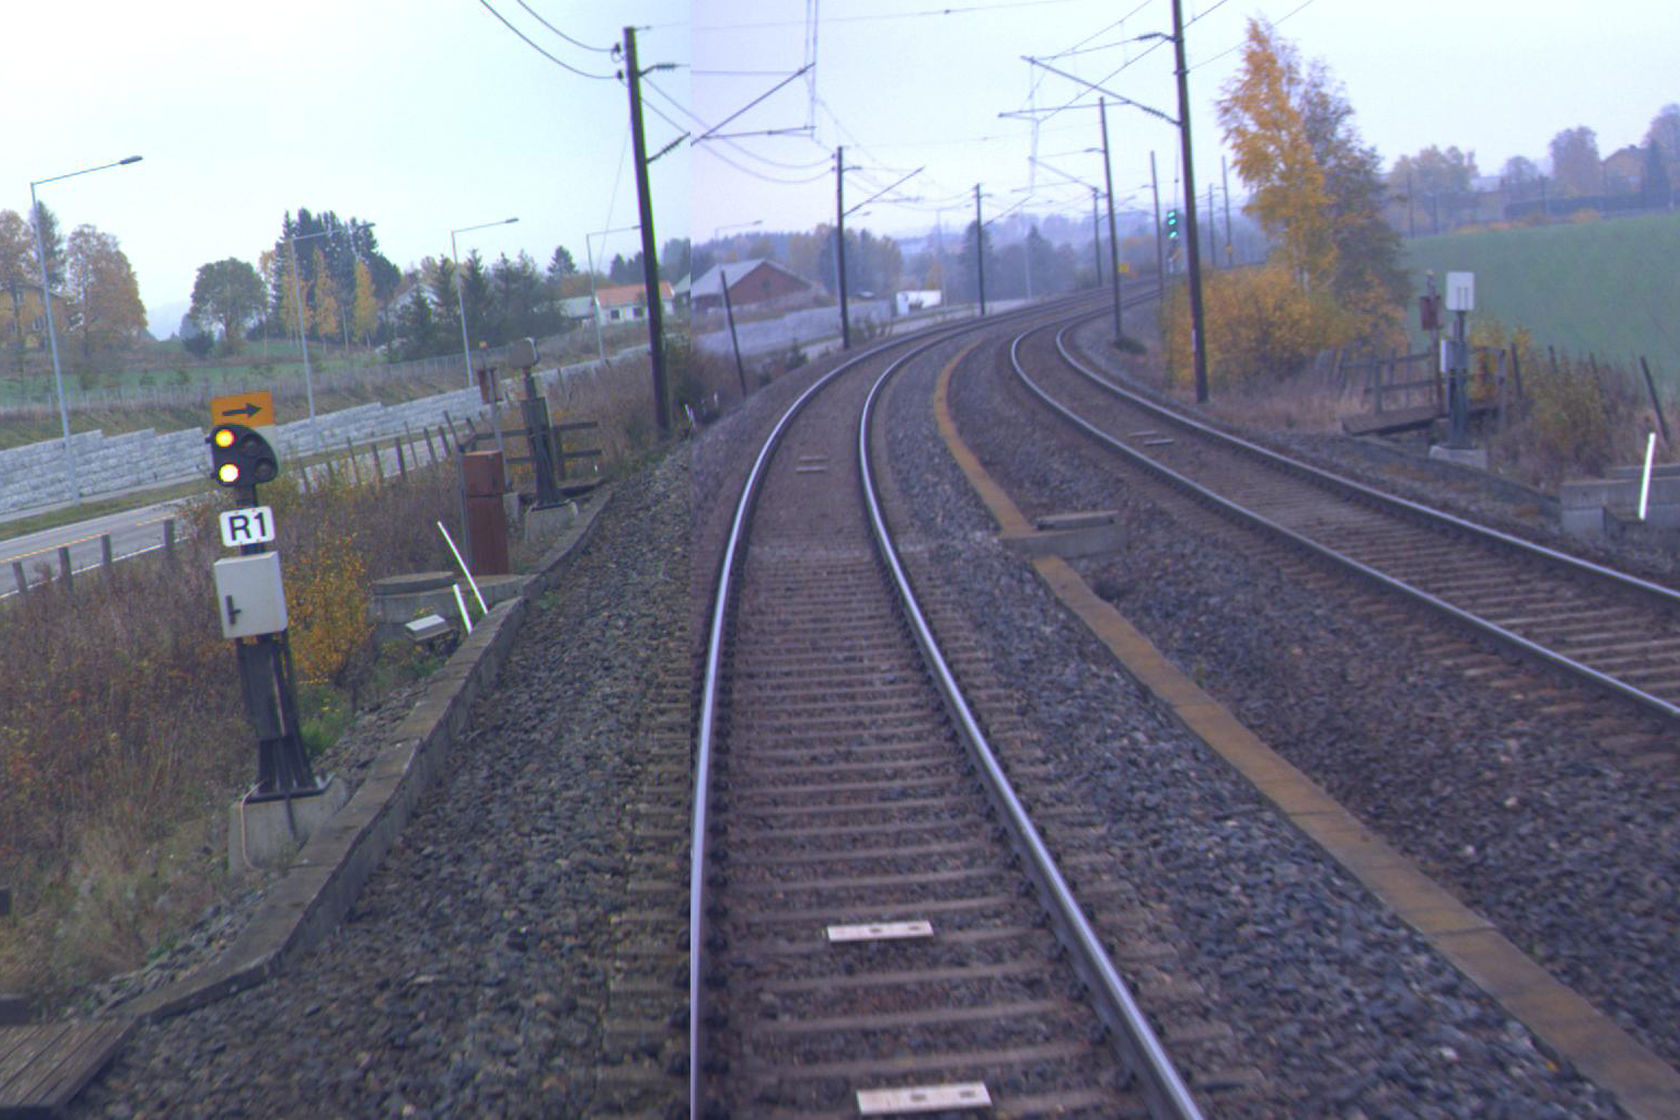 Tracks at Asper station